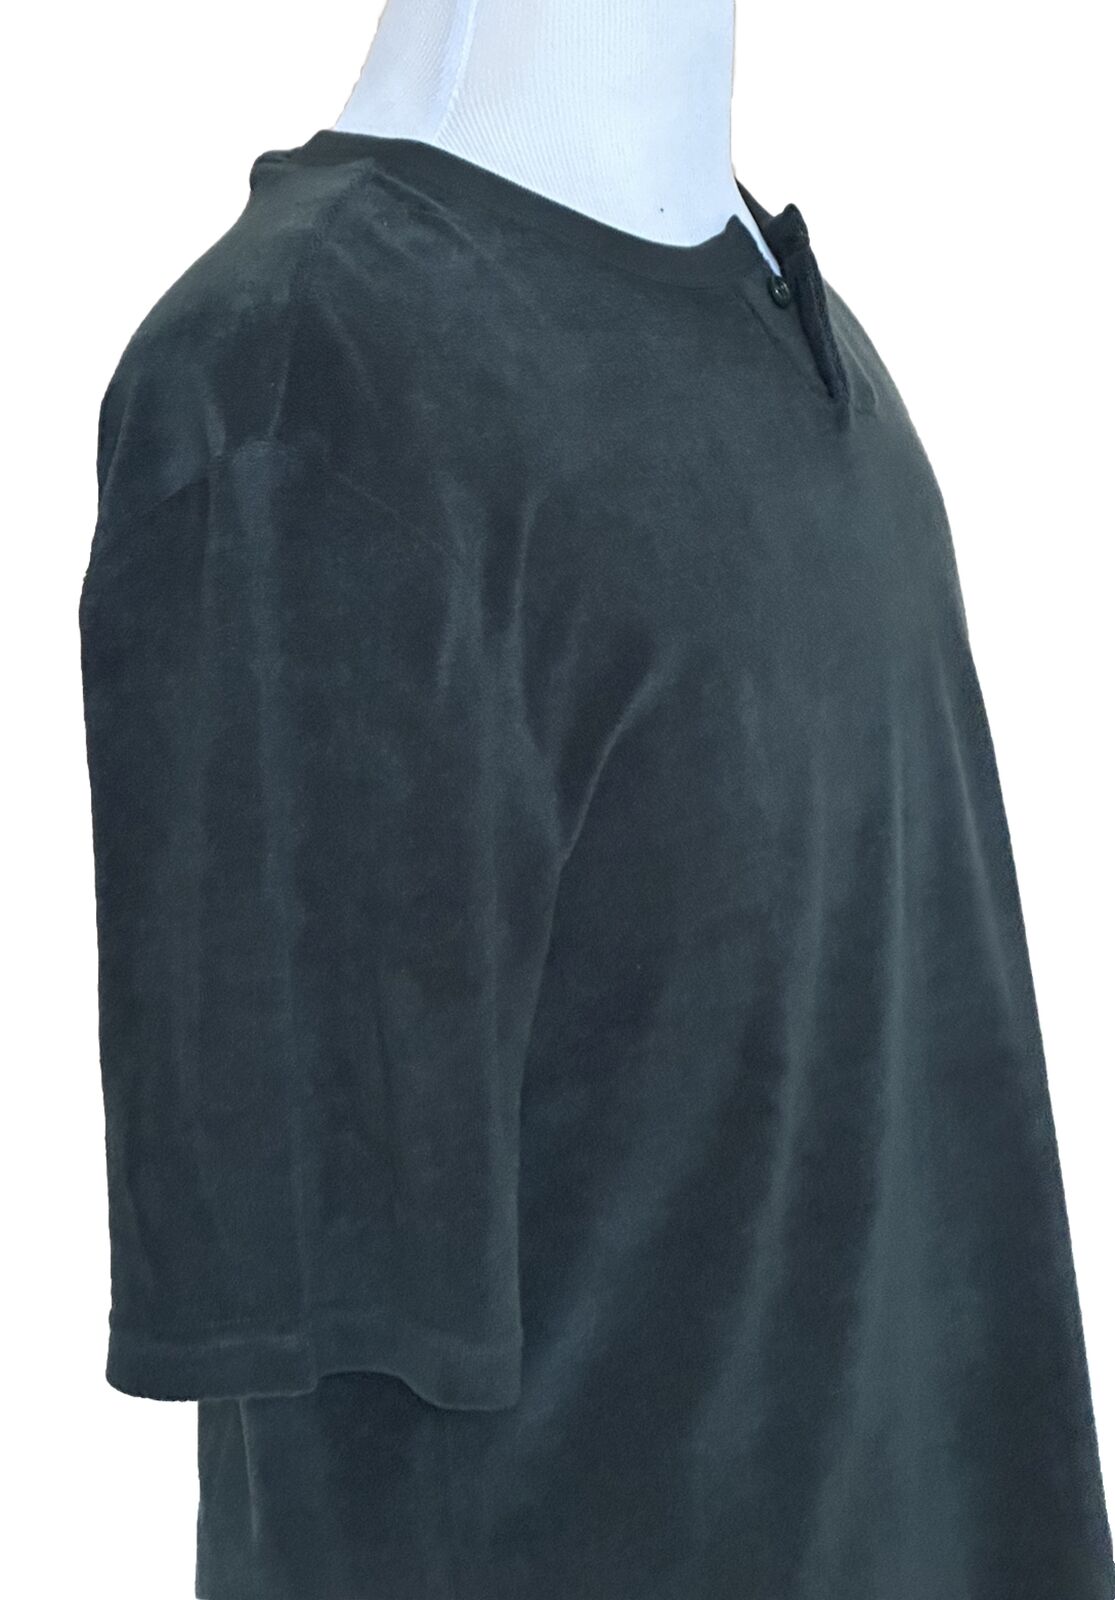 NWT $550 Bottega Veneta Men’s Toweling Jersey T-shirt Green Large Italy 656849